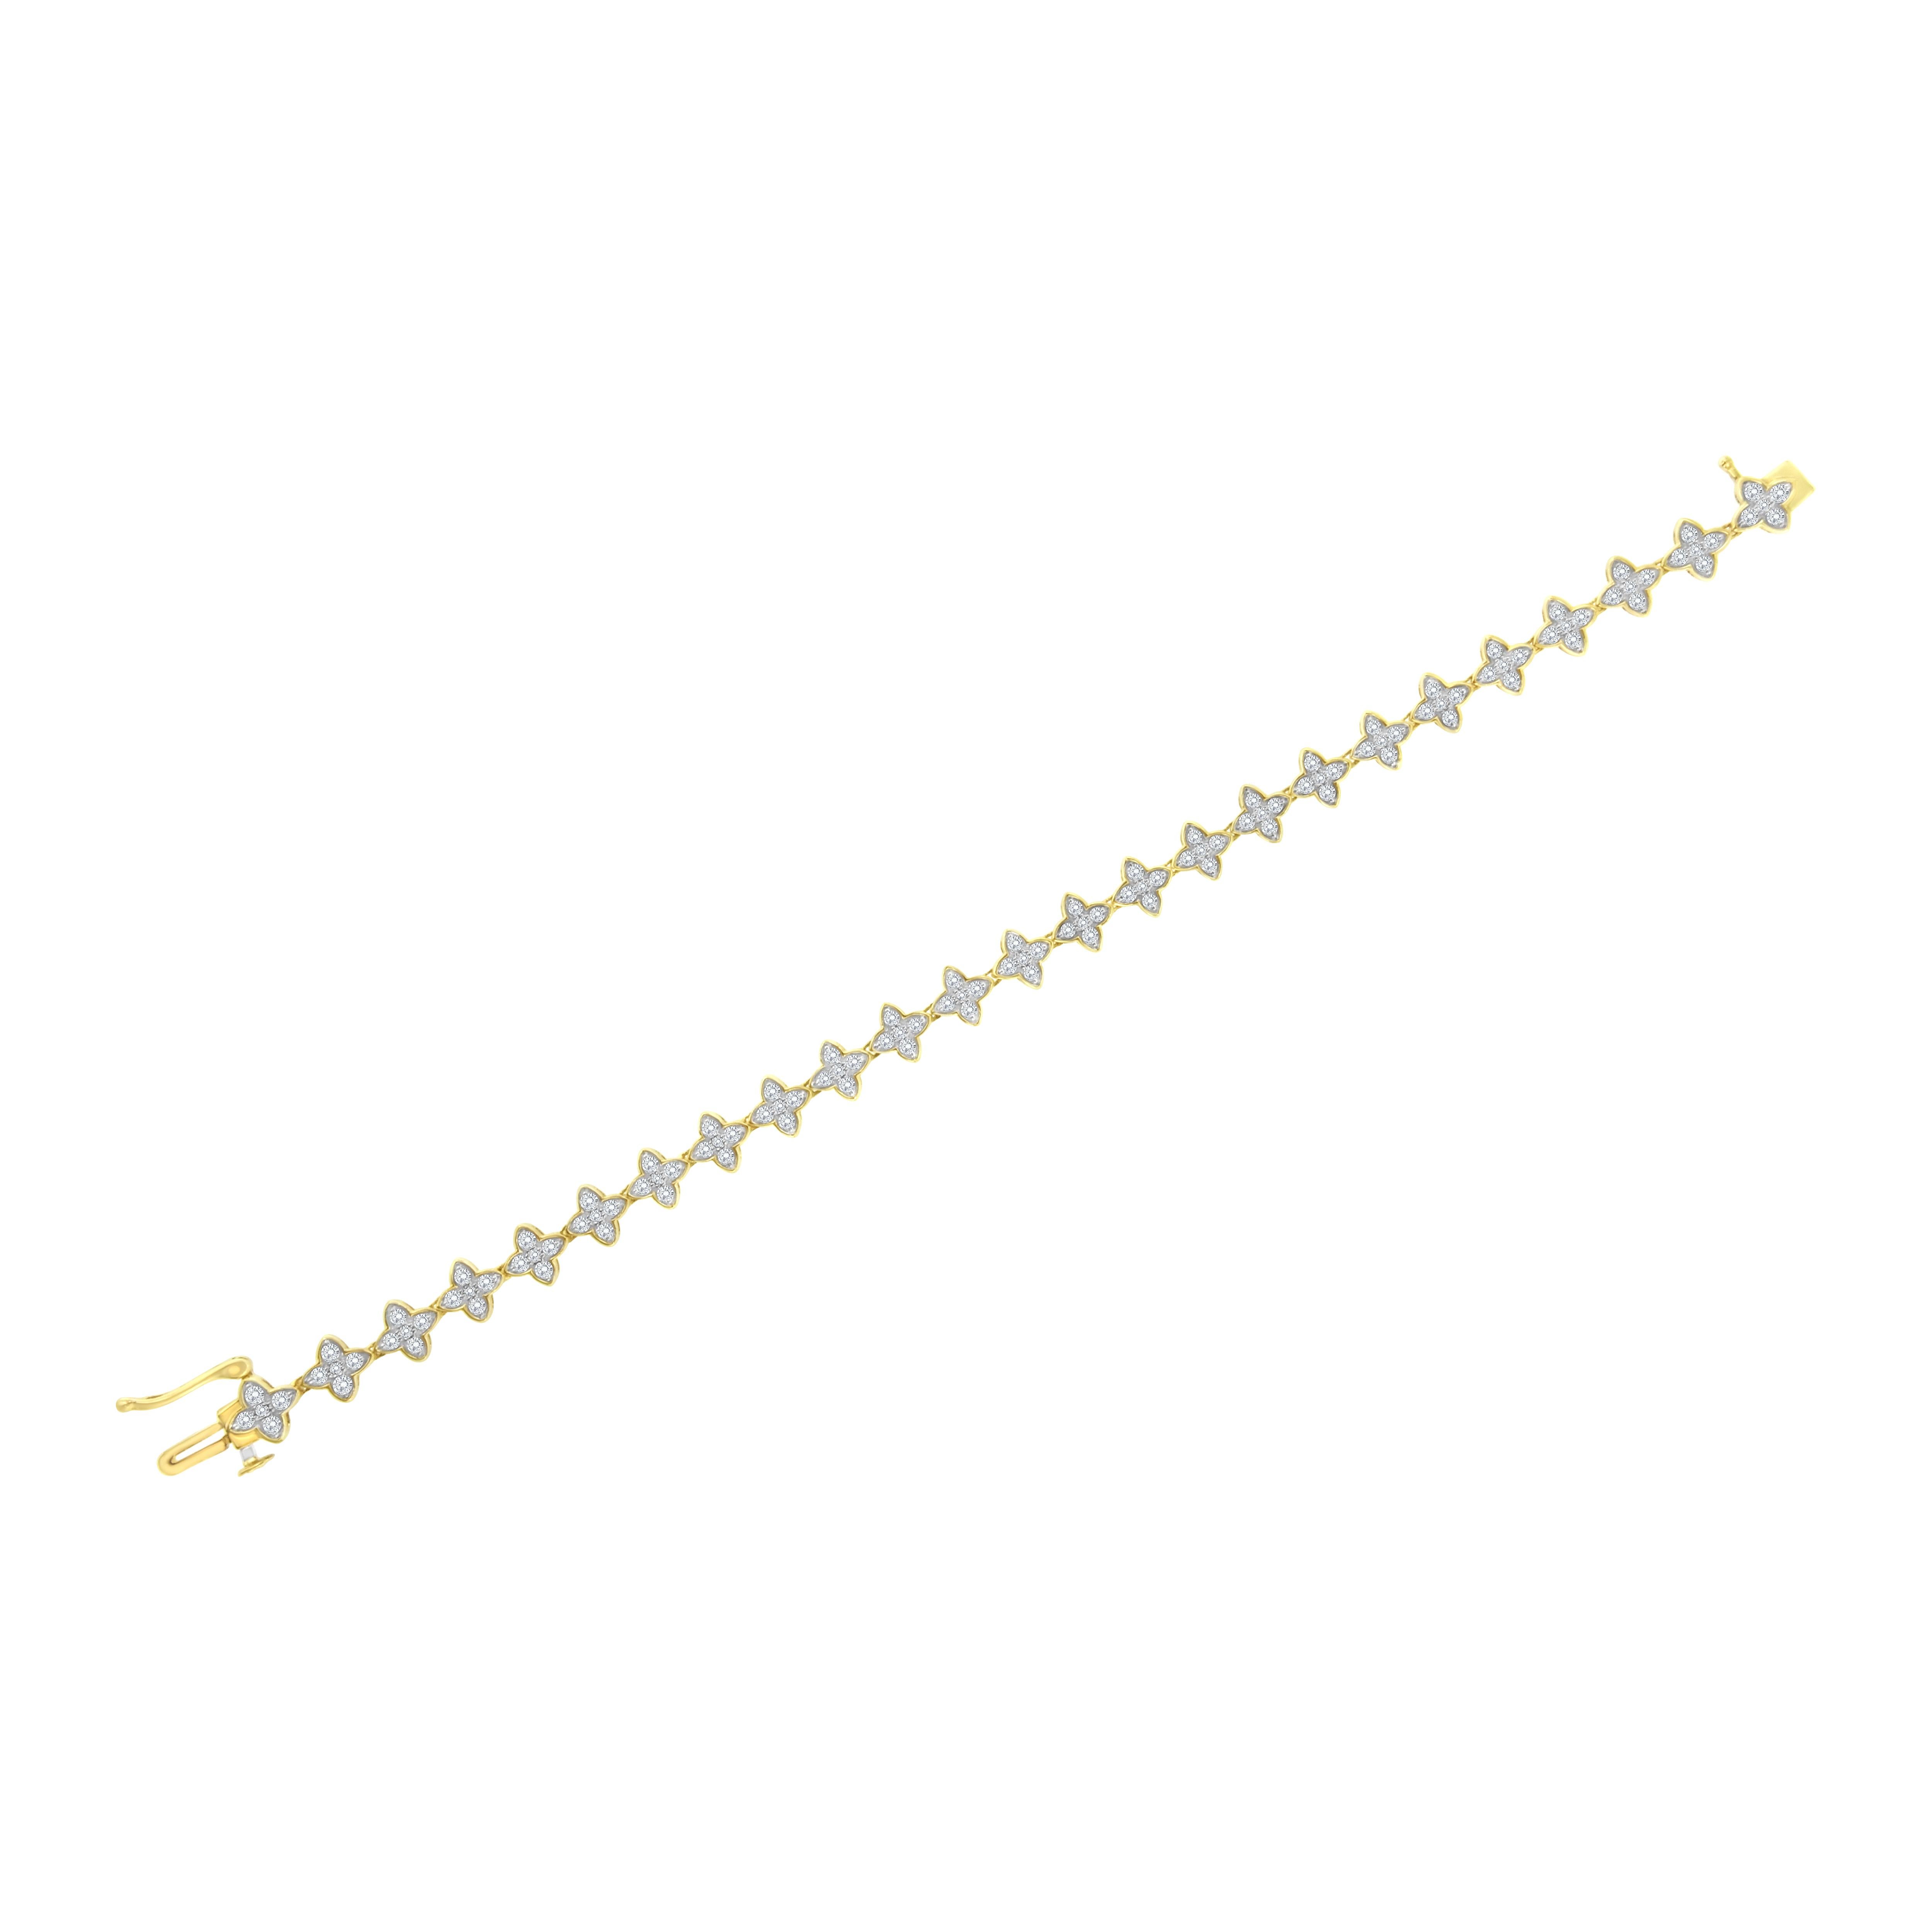 10k gold clover bracelet